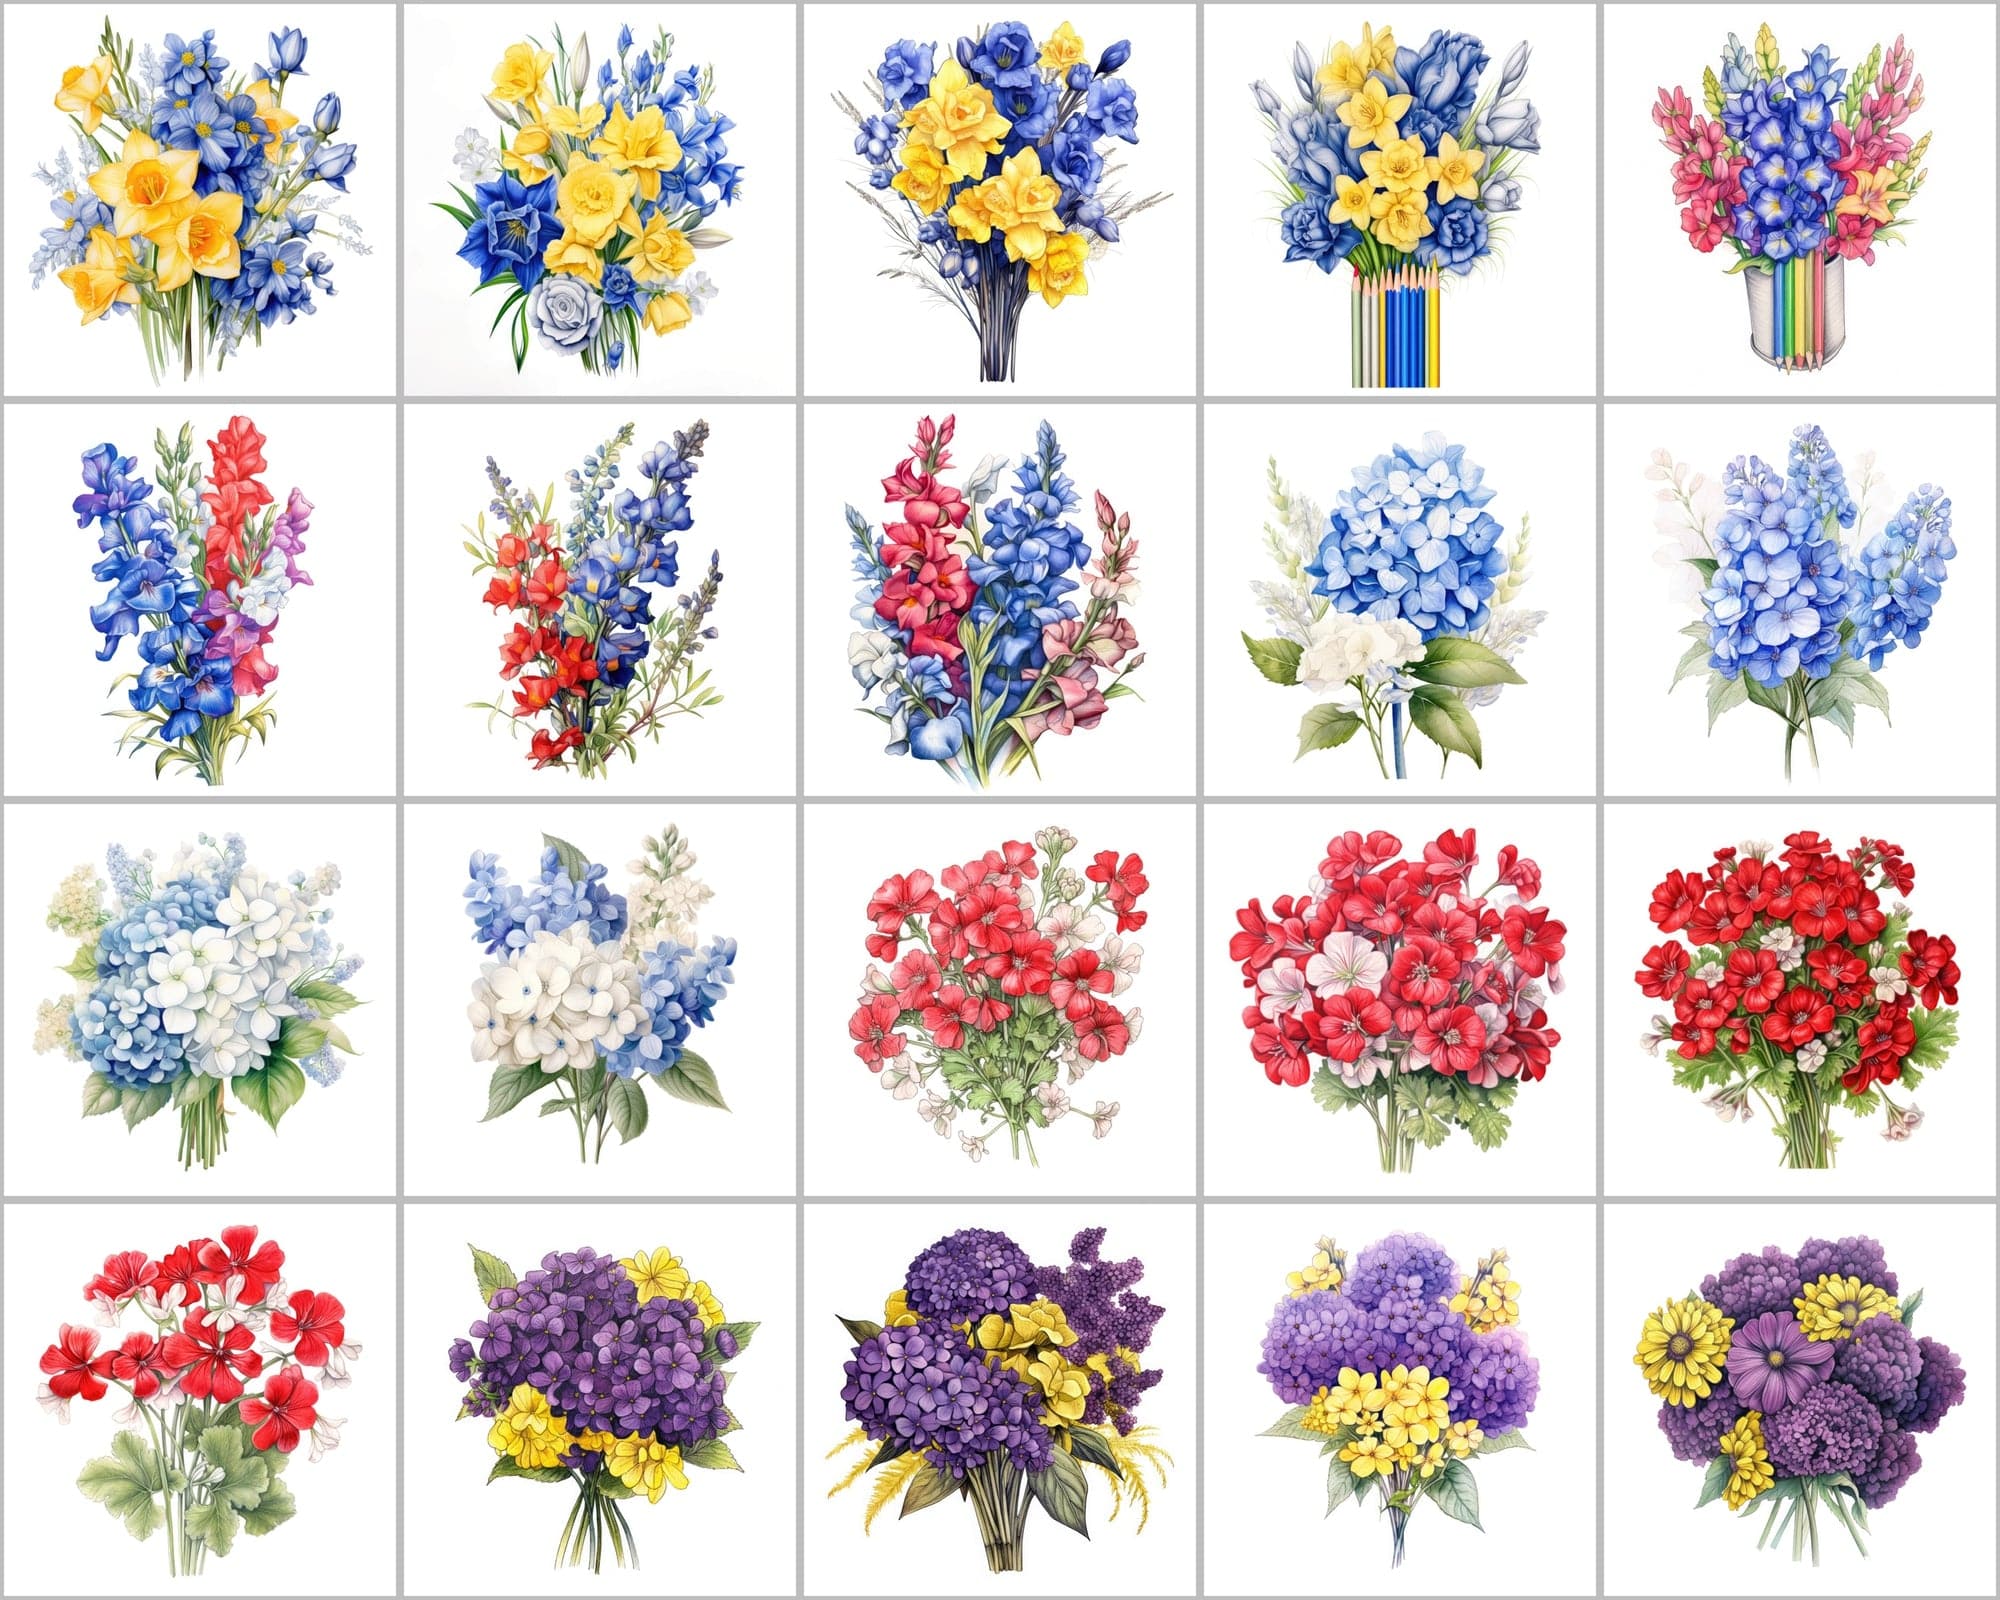 200 Watercolor Flower Bouquet PNGs for Your Artistic Creations Digital Download Sumobundle